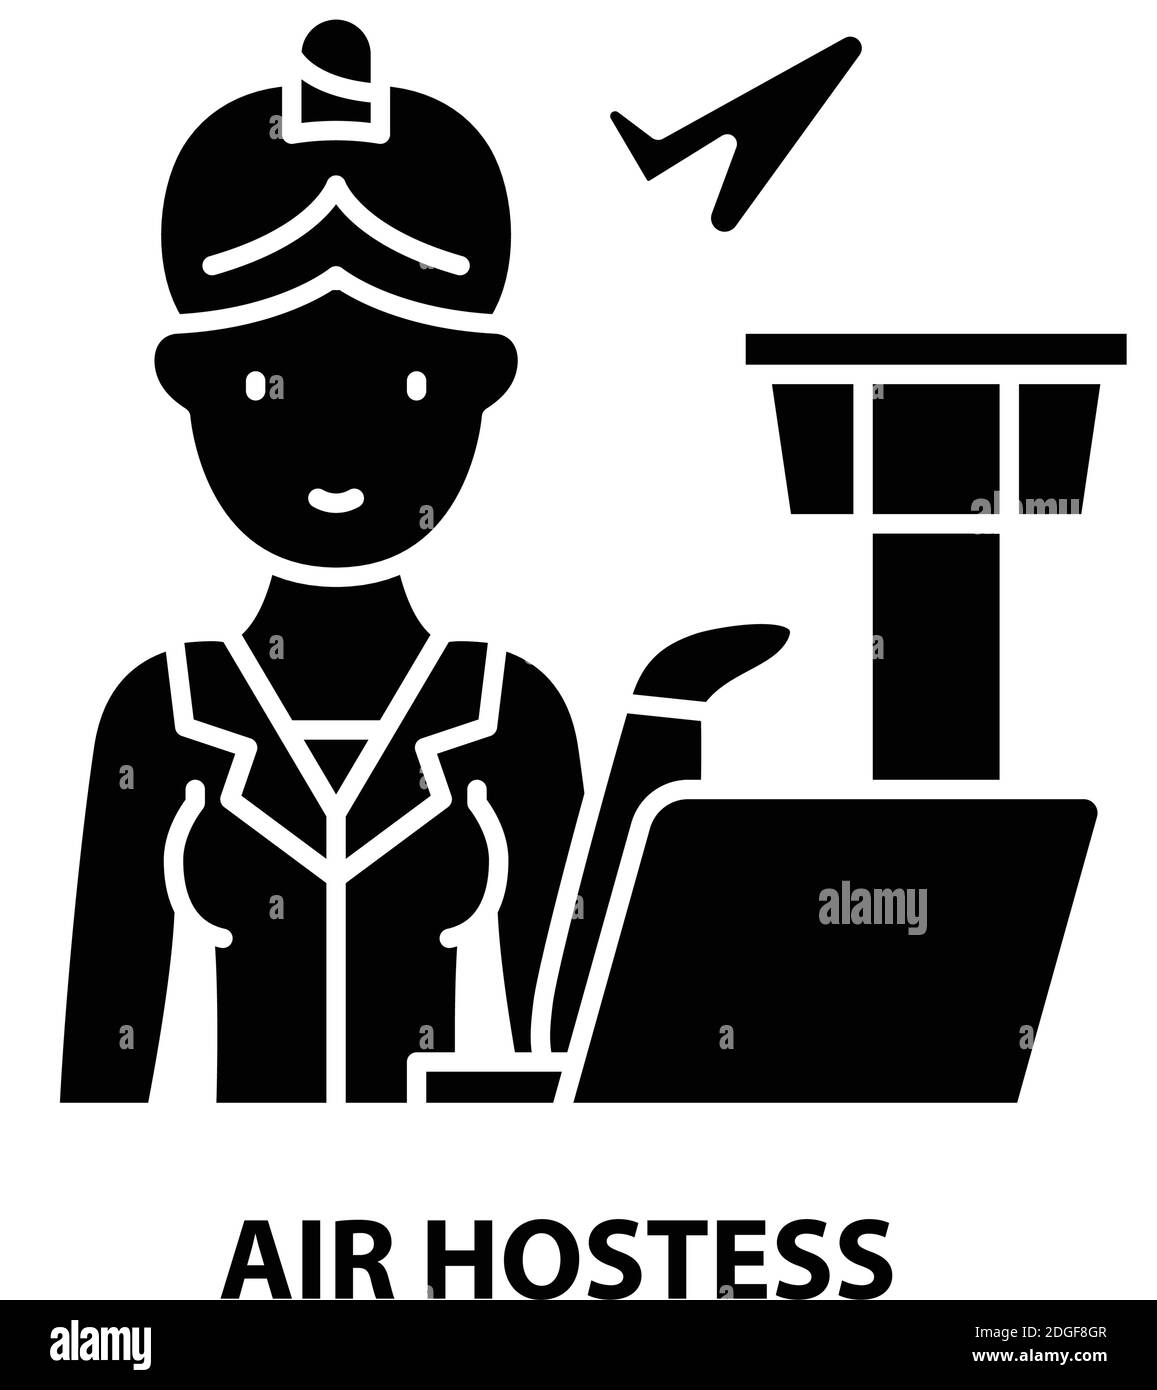 air hostess sign icon, black vector sign with editable strokes, concept illustration Stock Vector